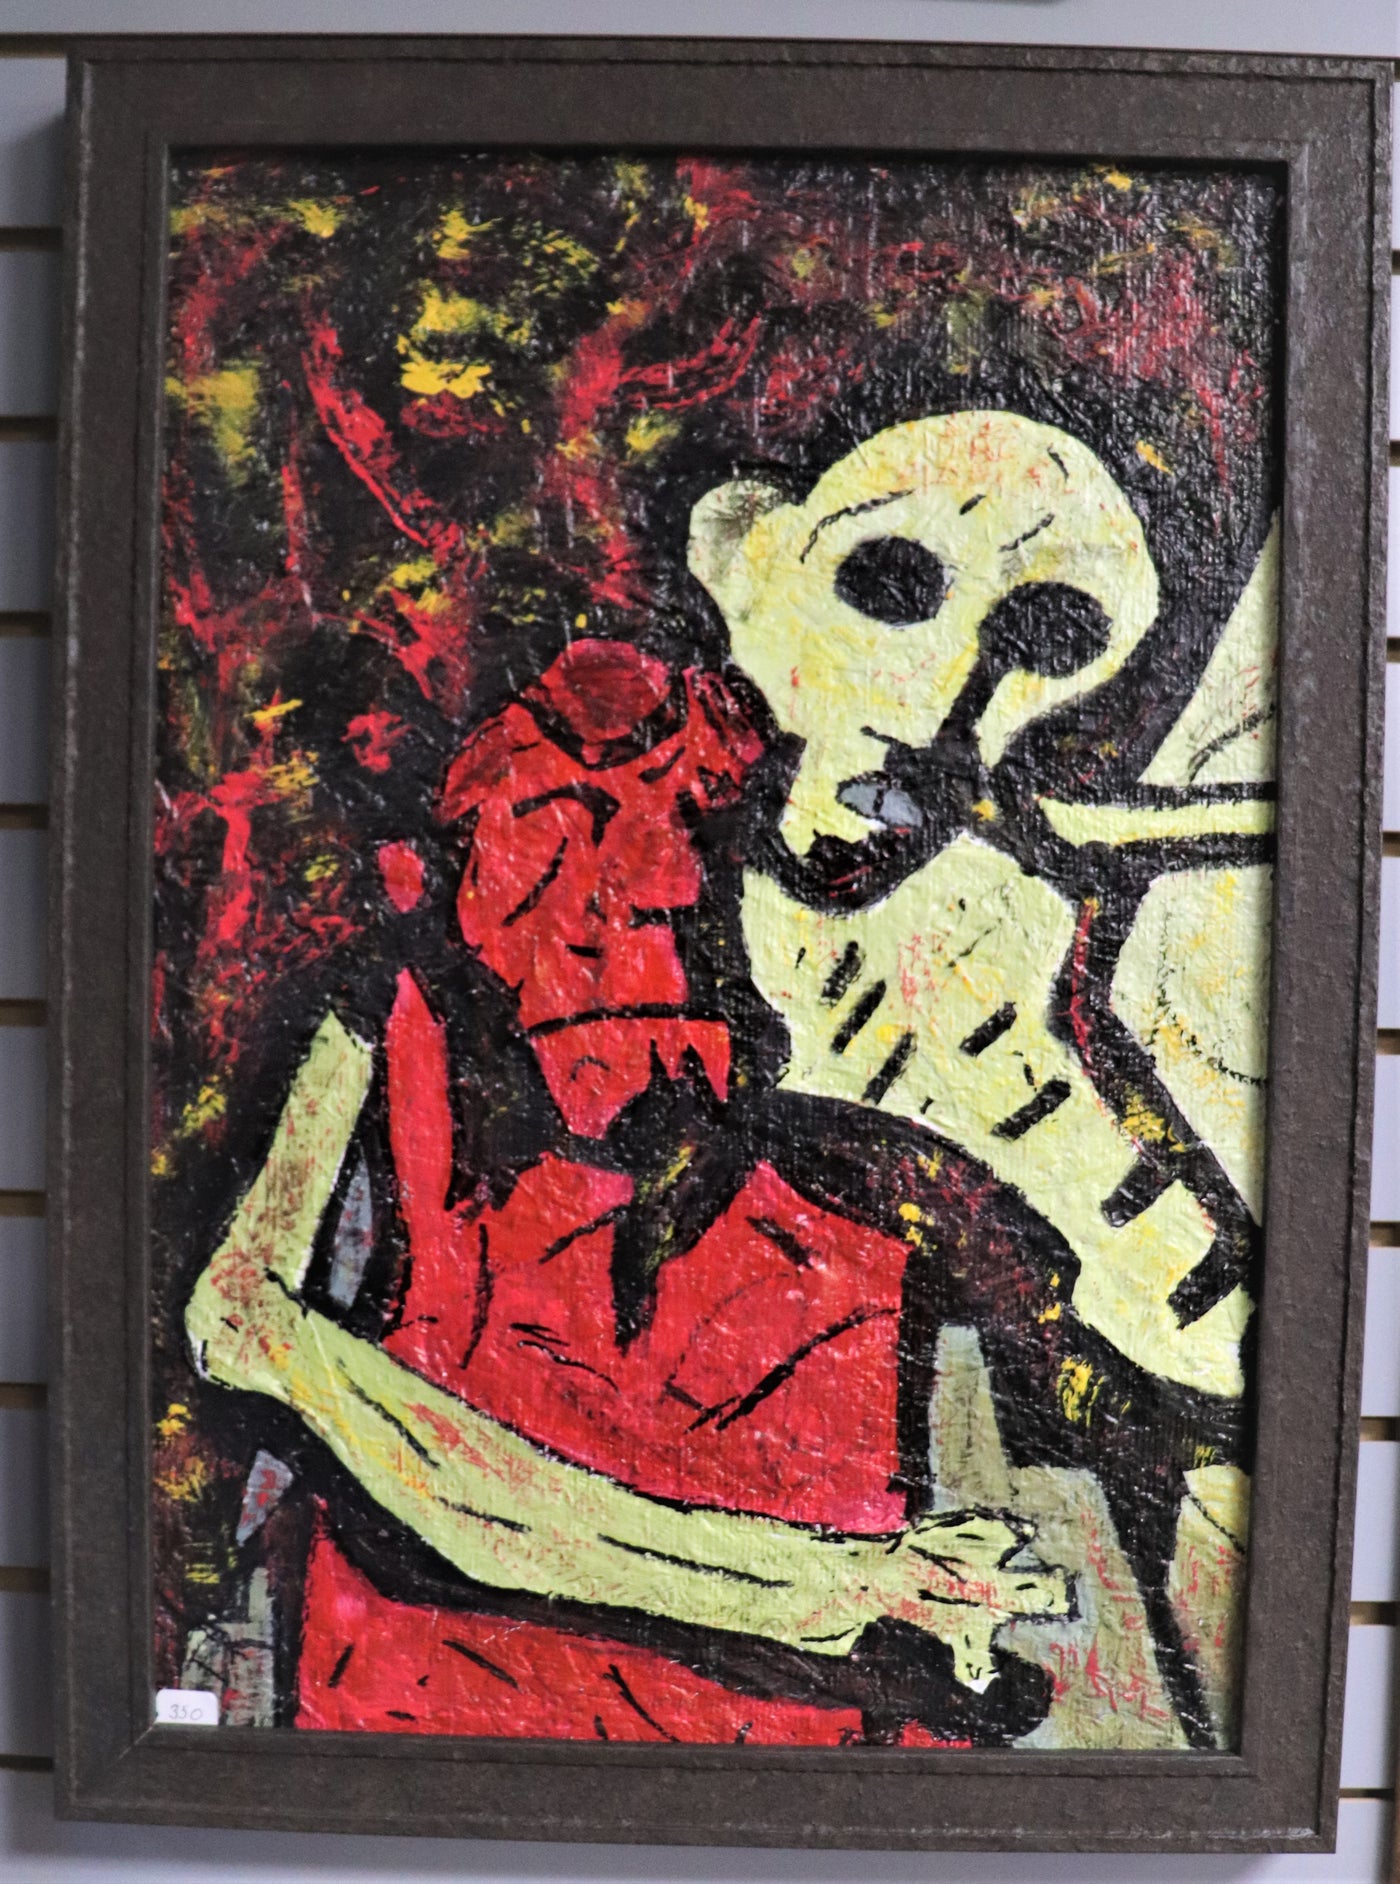 Hellboy - Painting on panel